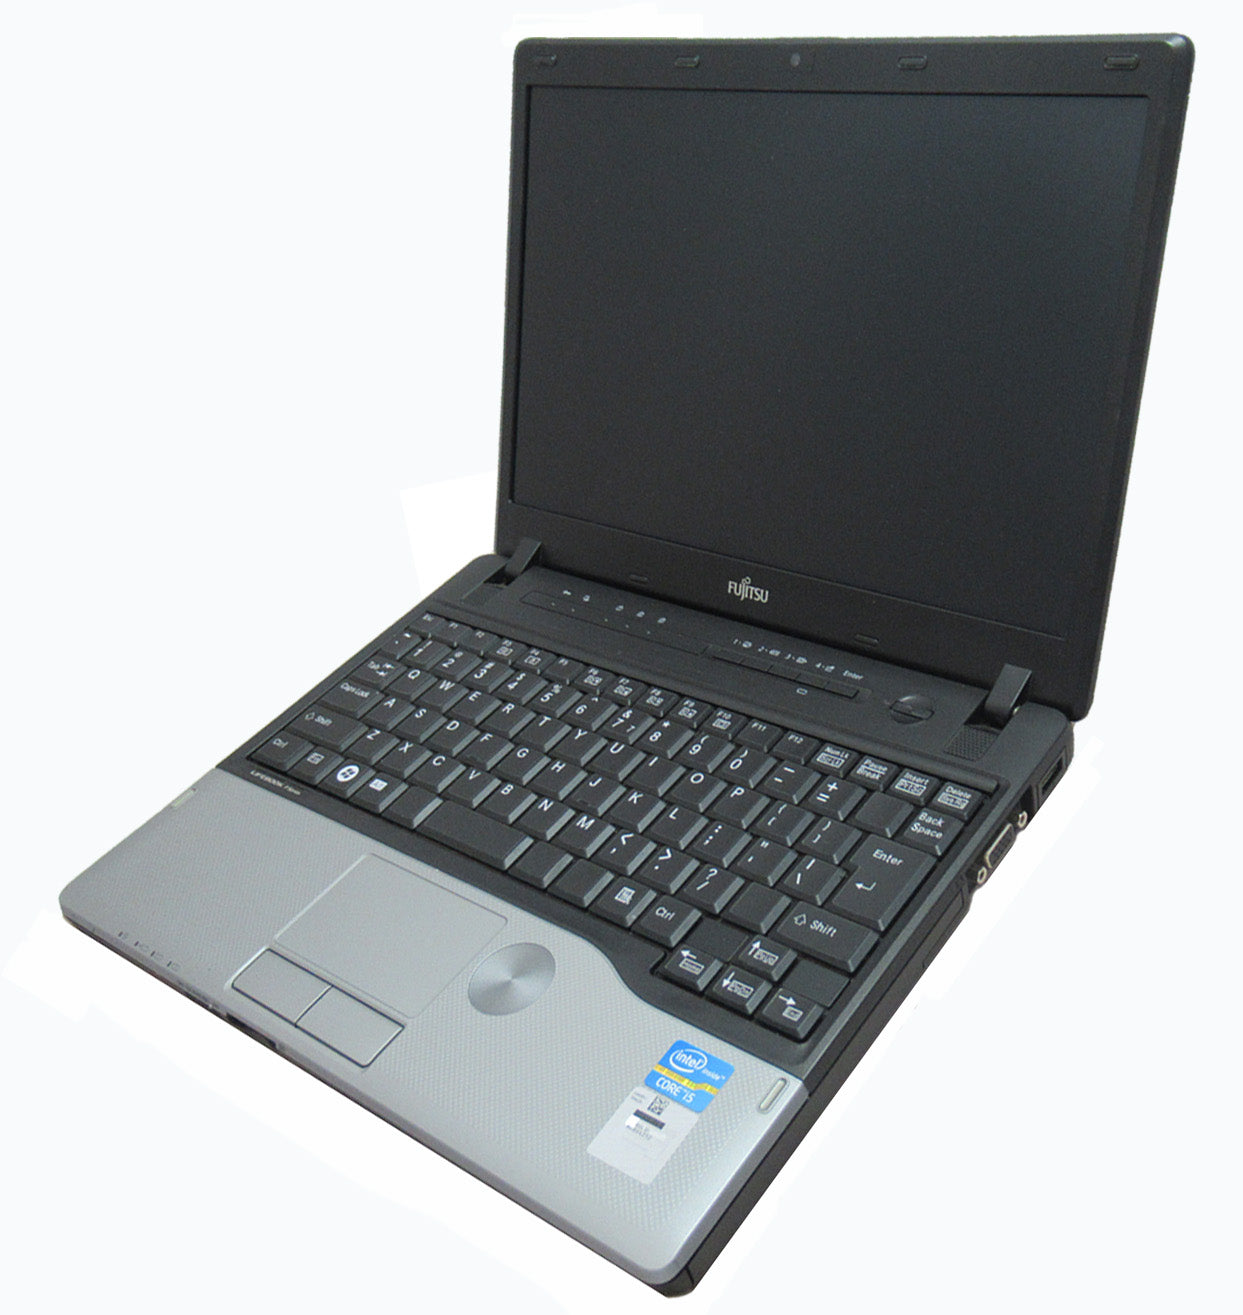 Fujitsu Lifebook P772 Laptop Computer Refurbished